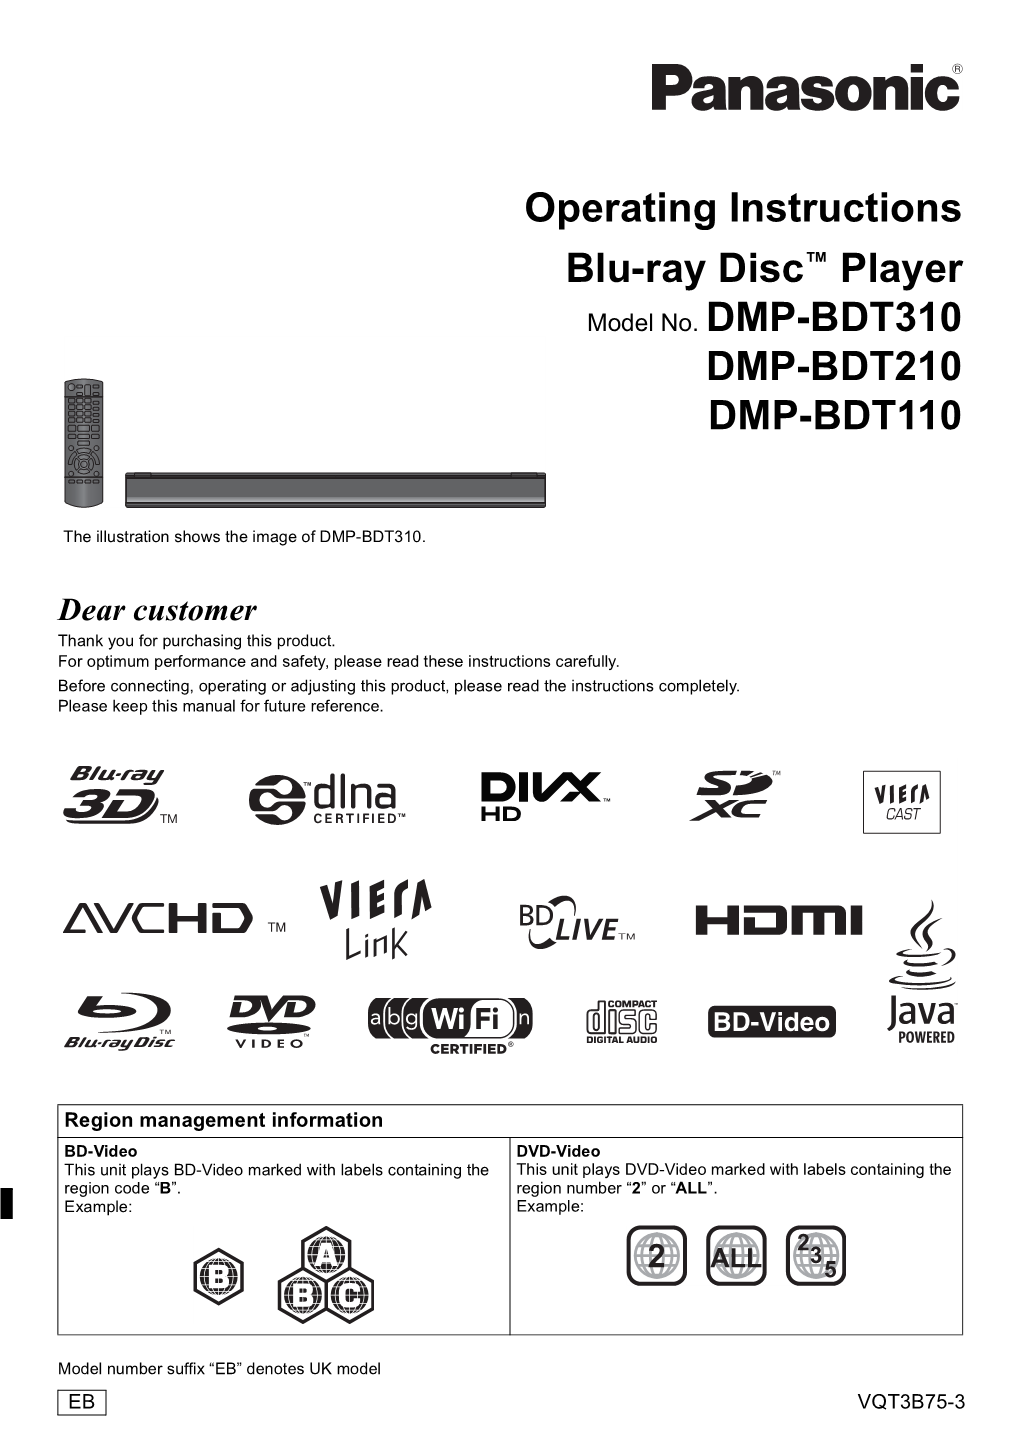 Operating Instructions Blu-Ray Disc™ Player DMP-BDT210 DMP-BDT110